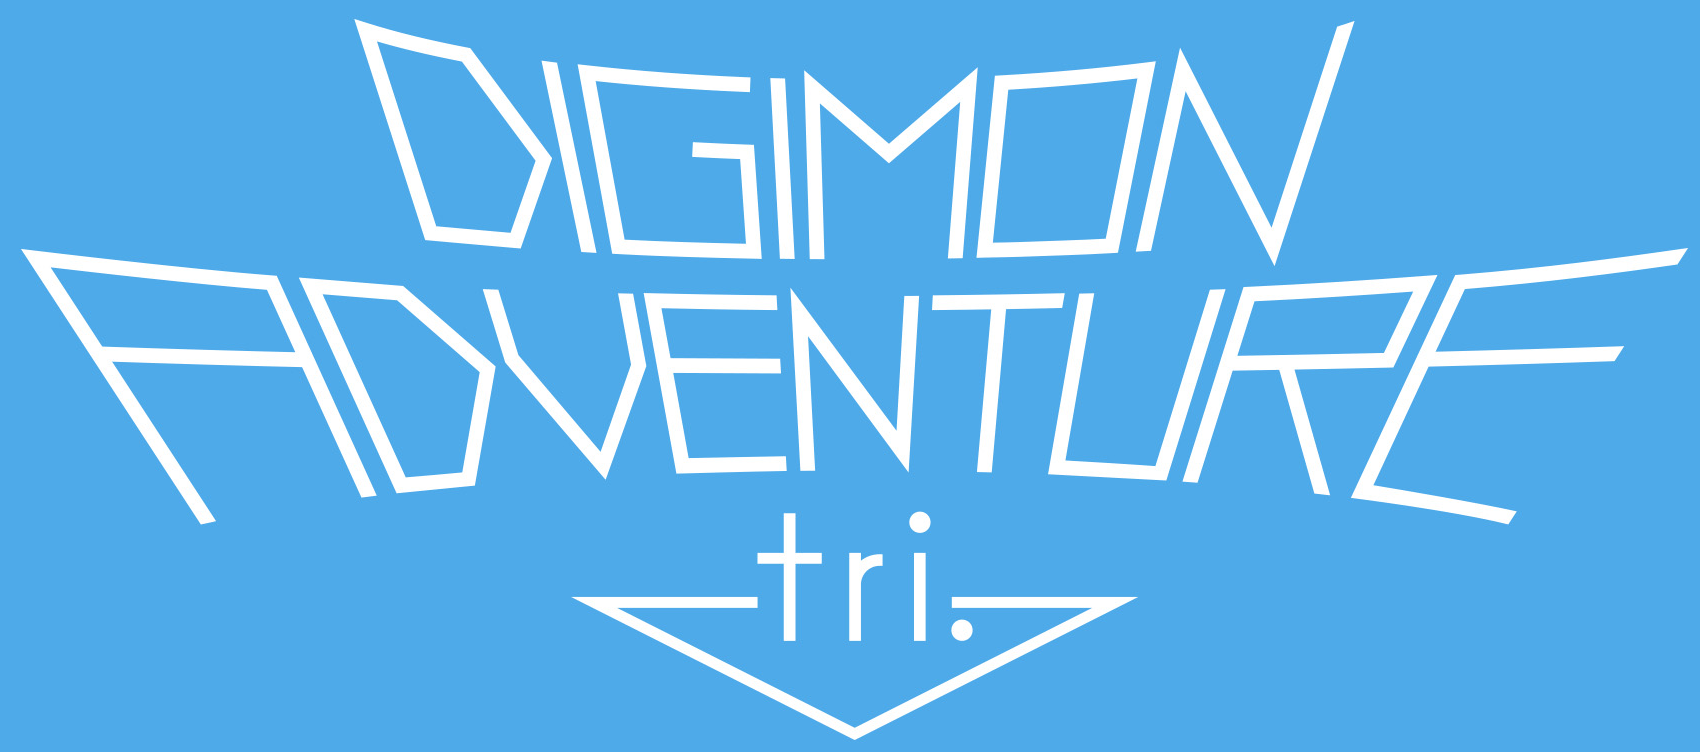 Digimon Adventure tri. Best Hit Parade - Wikimon - The #1 Digimon wiki